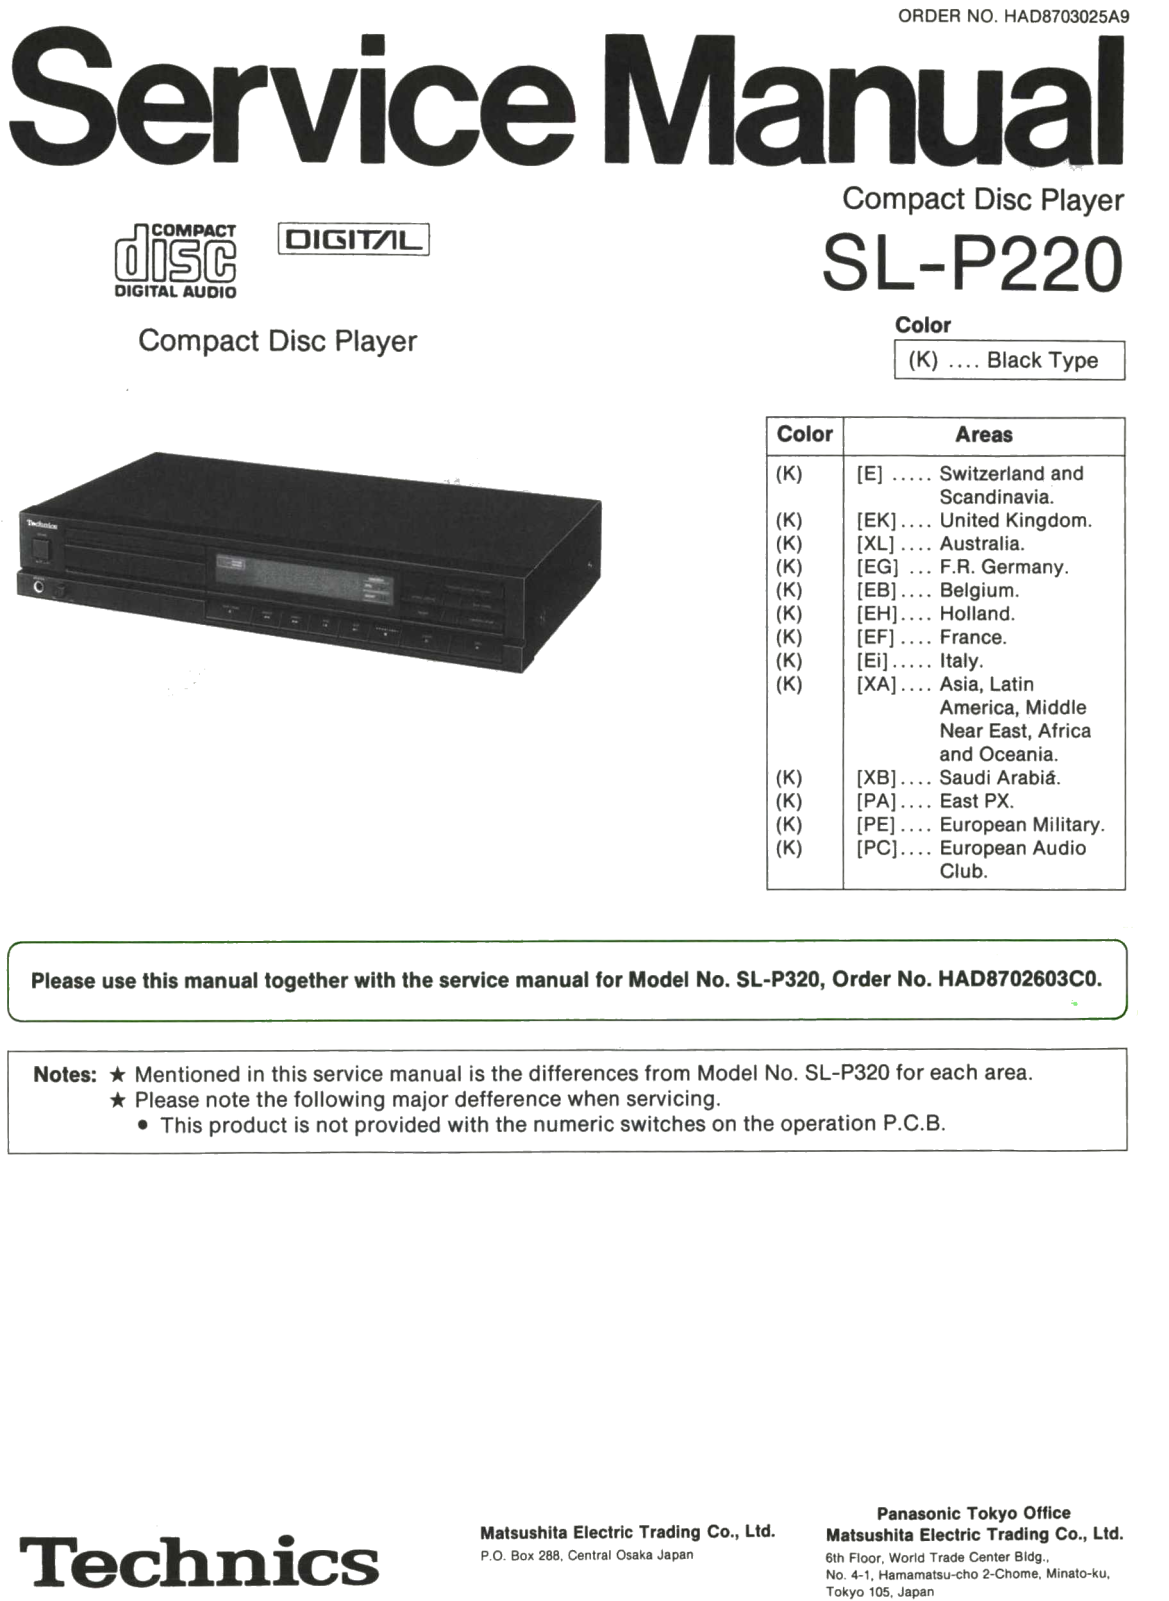 Technics SL-P-220 Service Manual